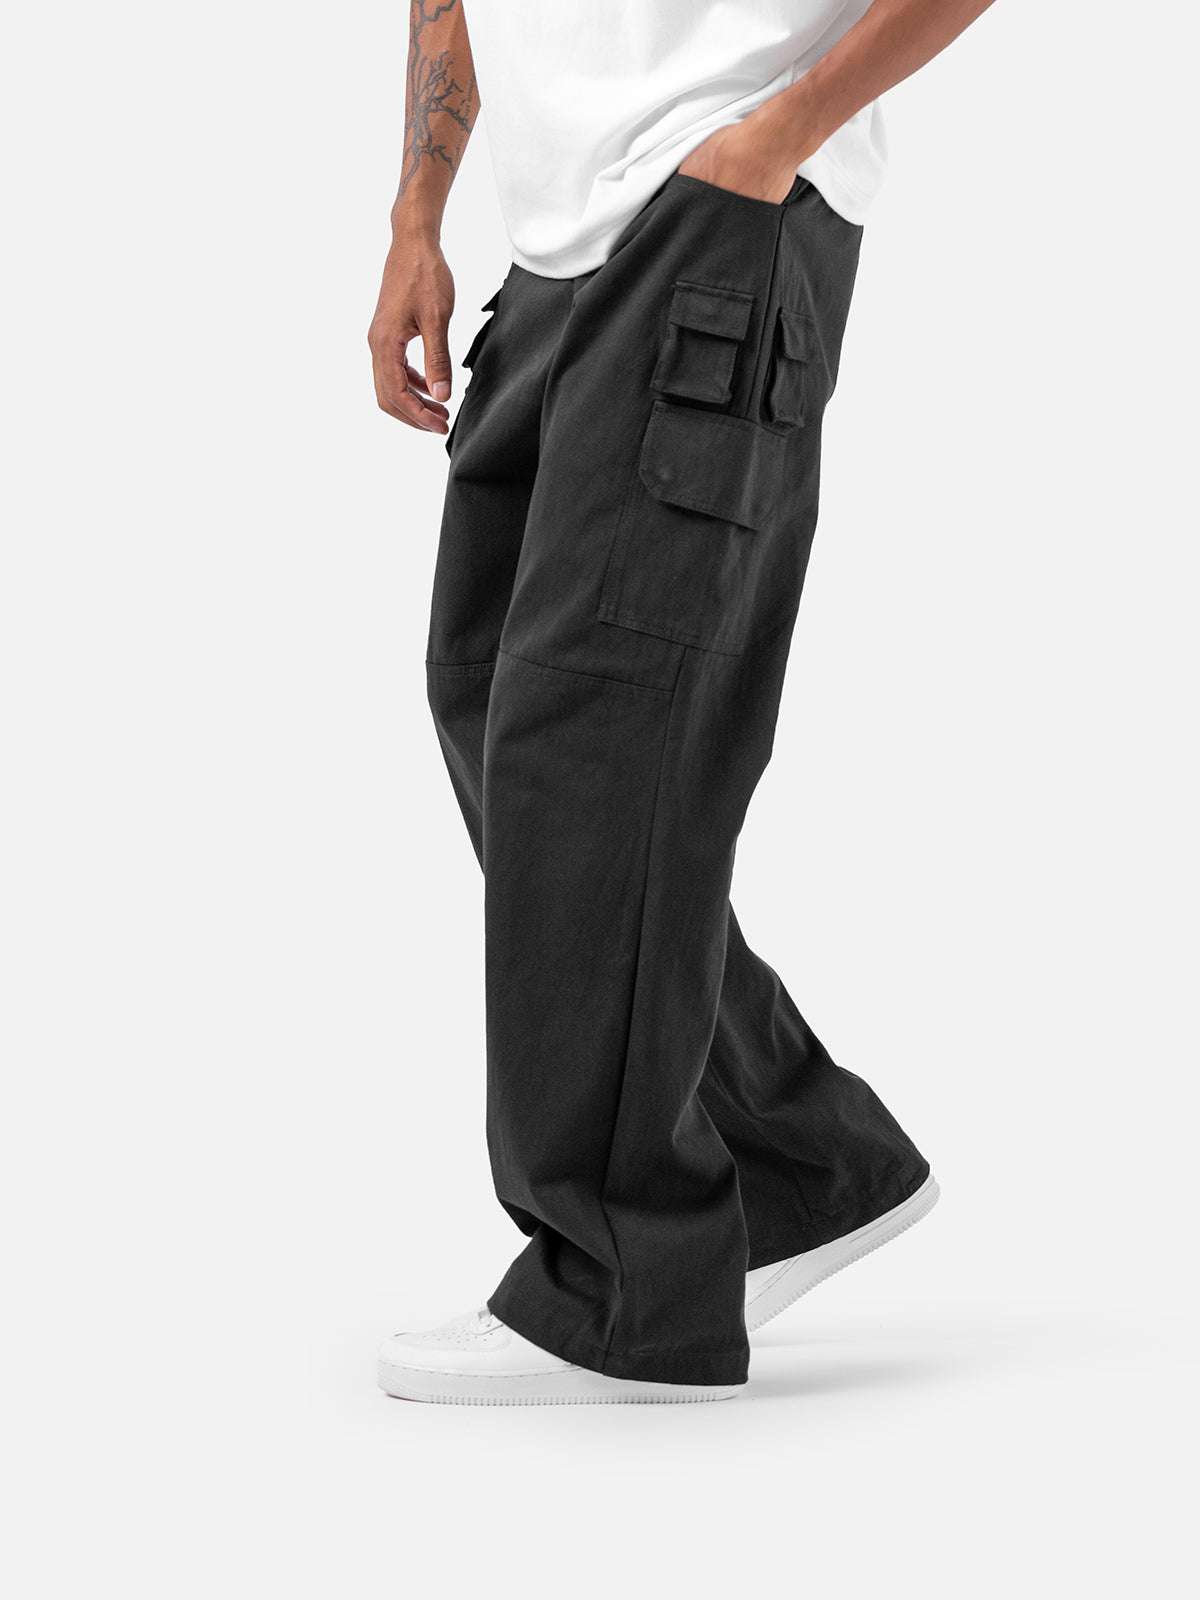 Quealent Mens Cargo Pants Men's Extreme Flat Front Regular Straight Pant  (Black,36)